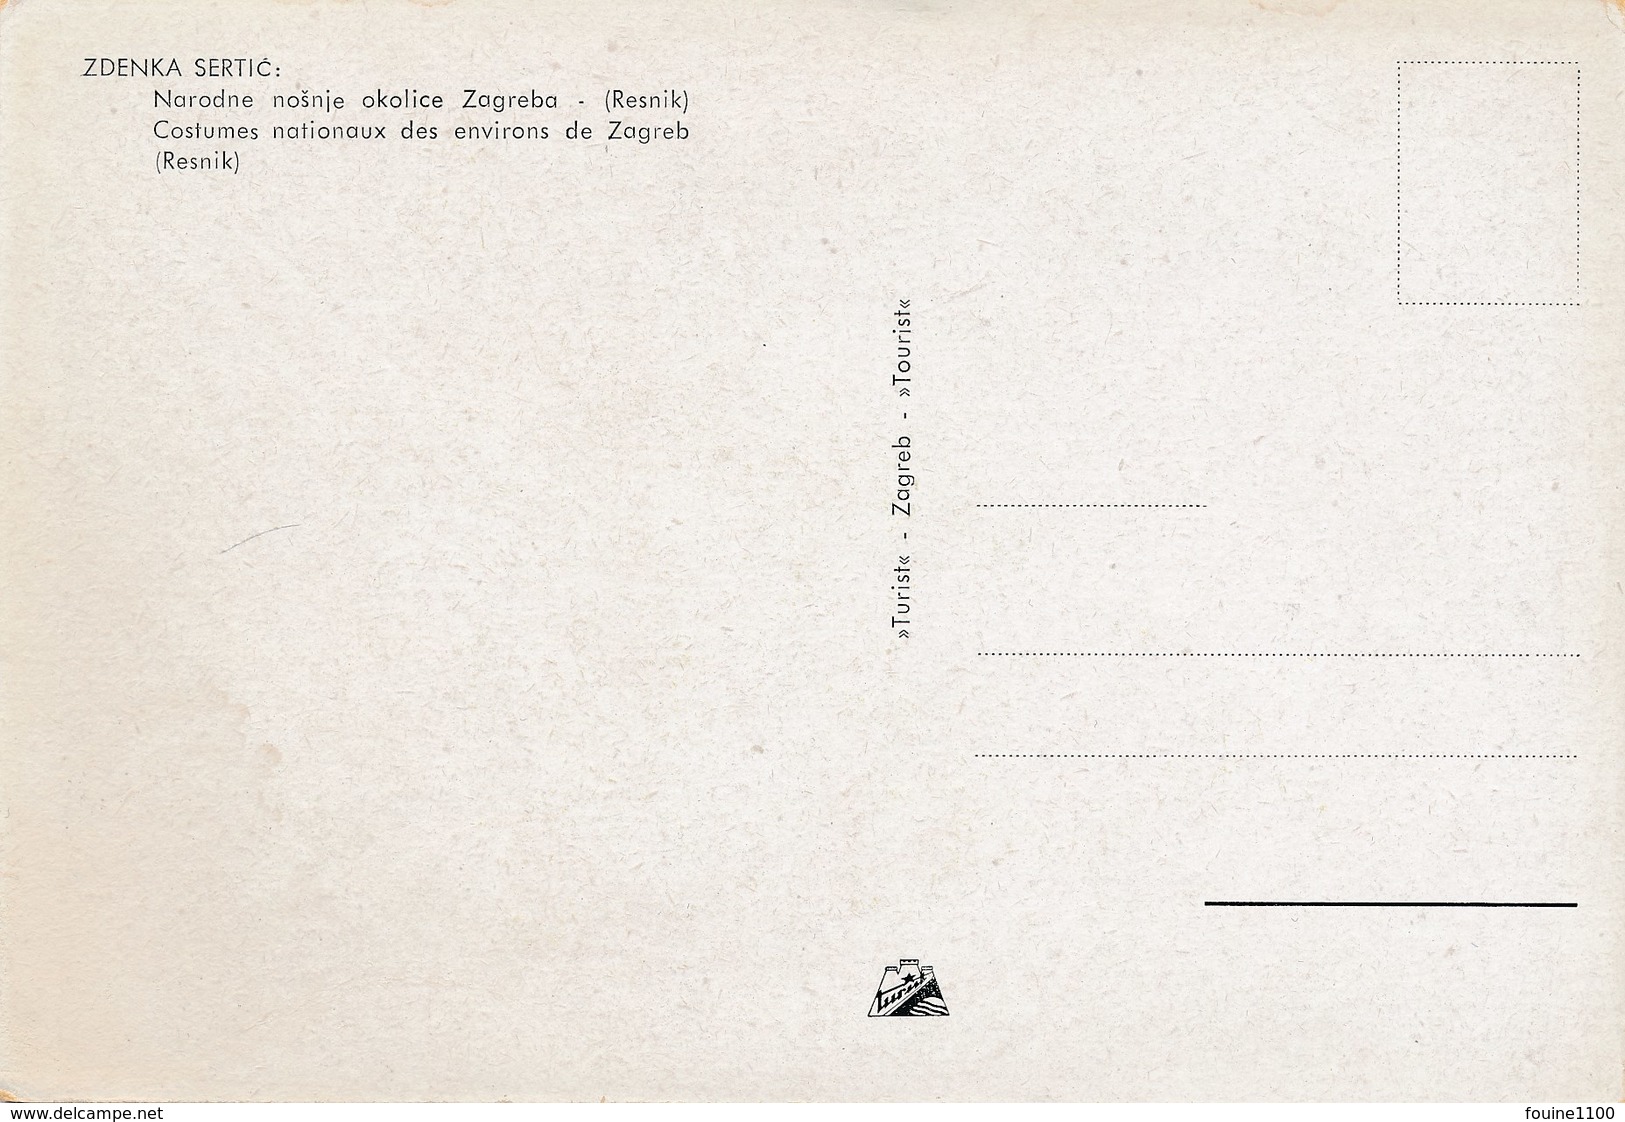 LOT  7 cartes zdenka sertic ( format 16 x 10,5 cm ) costumes ZAGREB bistra resnik sestine vukomerec brezovica stupnik